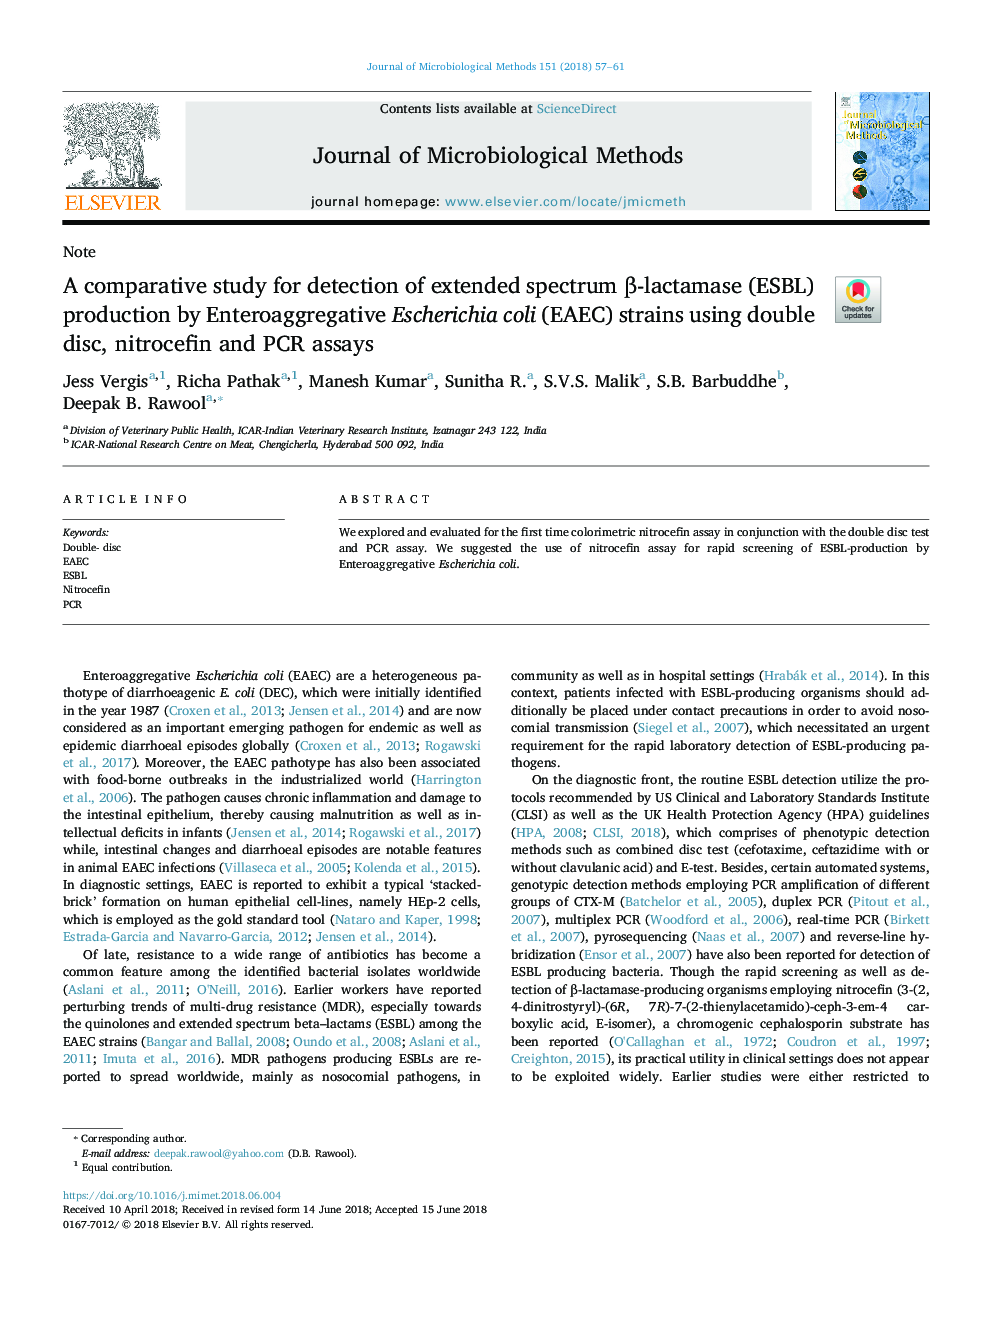 A comparative study for detection of extended spectrum Î²-lactamase (ESBL) production by Enteroaggregative Escherichia coli (EAEC) strains using double disc, nitrocefin and PCR assays